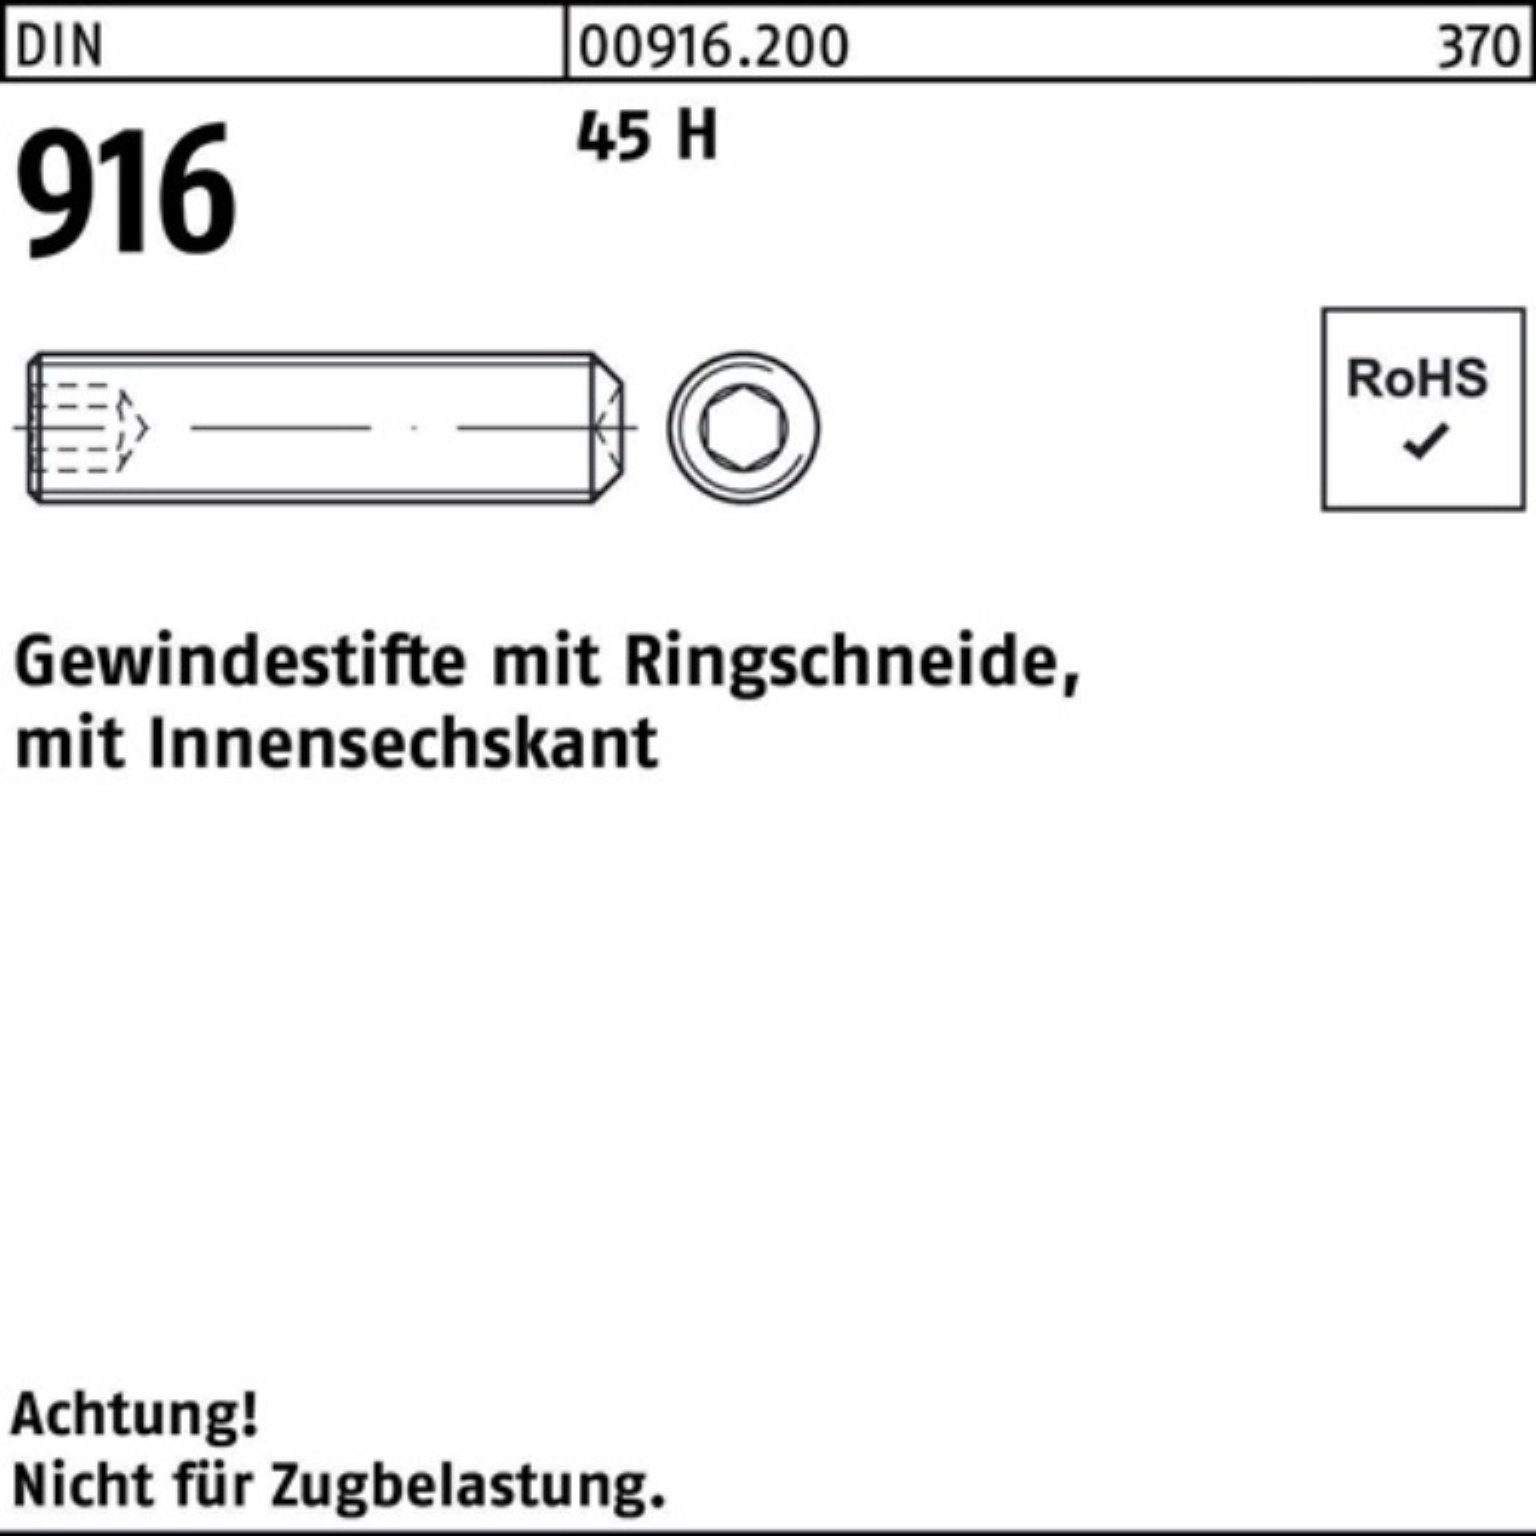 Reyher Gewindebolzen 100er Pack Gewindestift DIN 916 Ringschn./Innen-6kt M24x 30 45 H 50 St